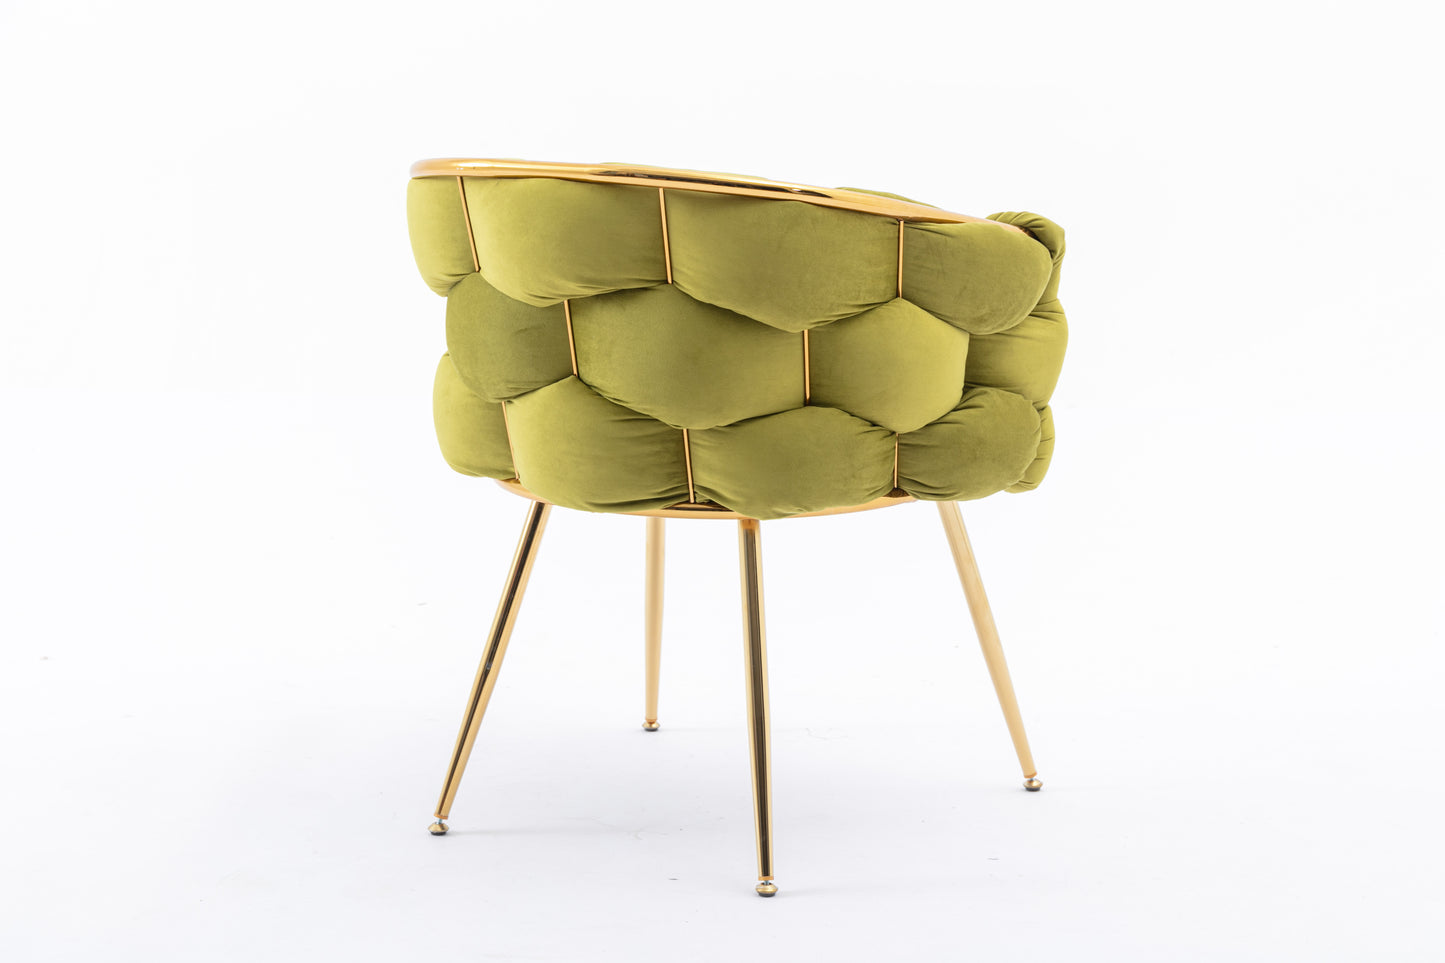 Olive Green Velvet Lounge Chairs: Set of 2